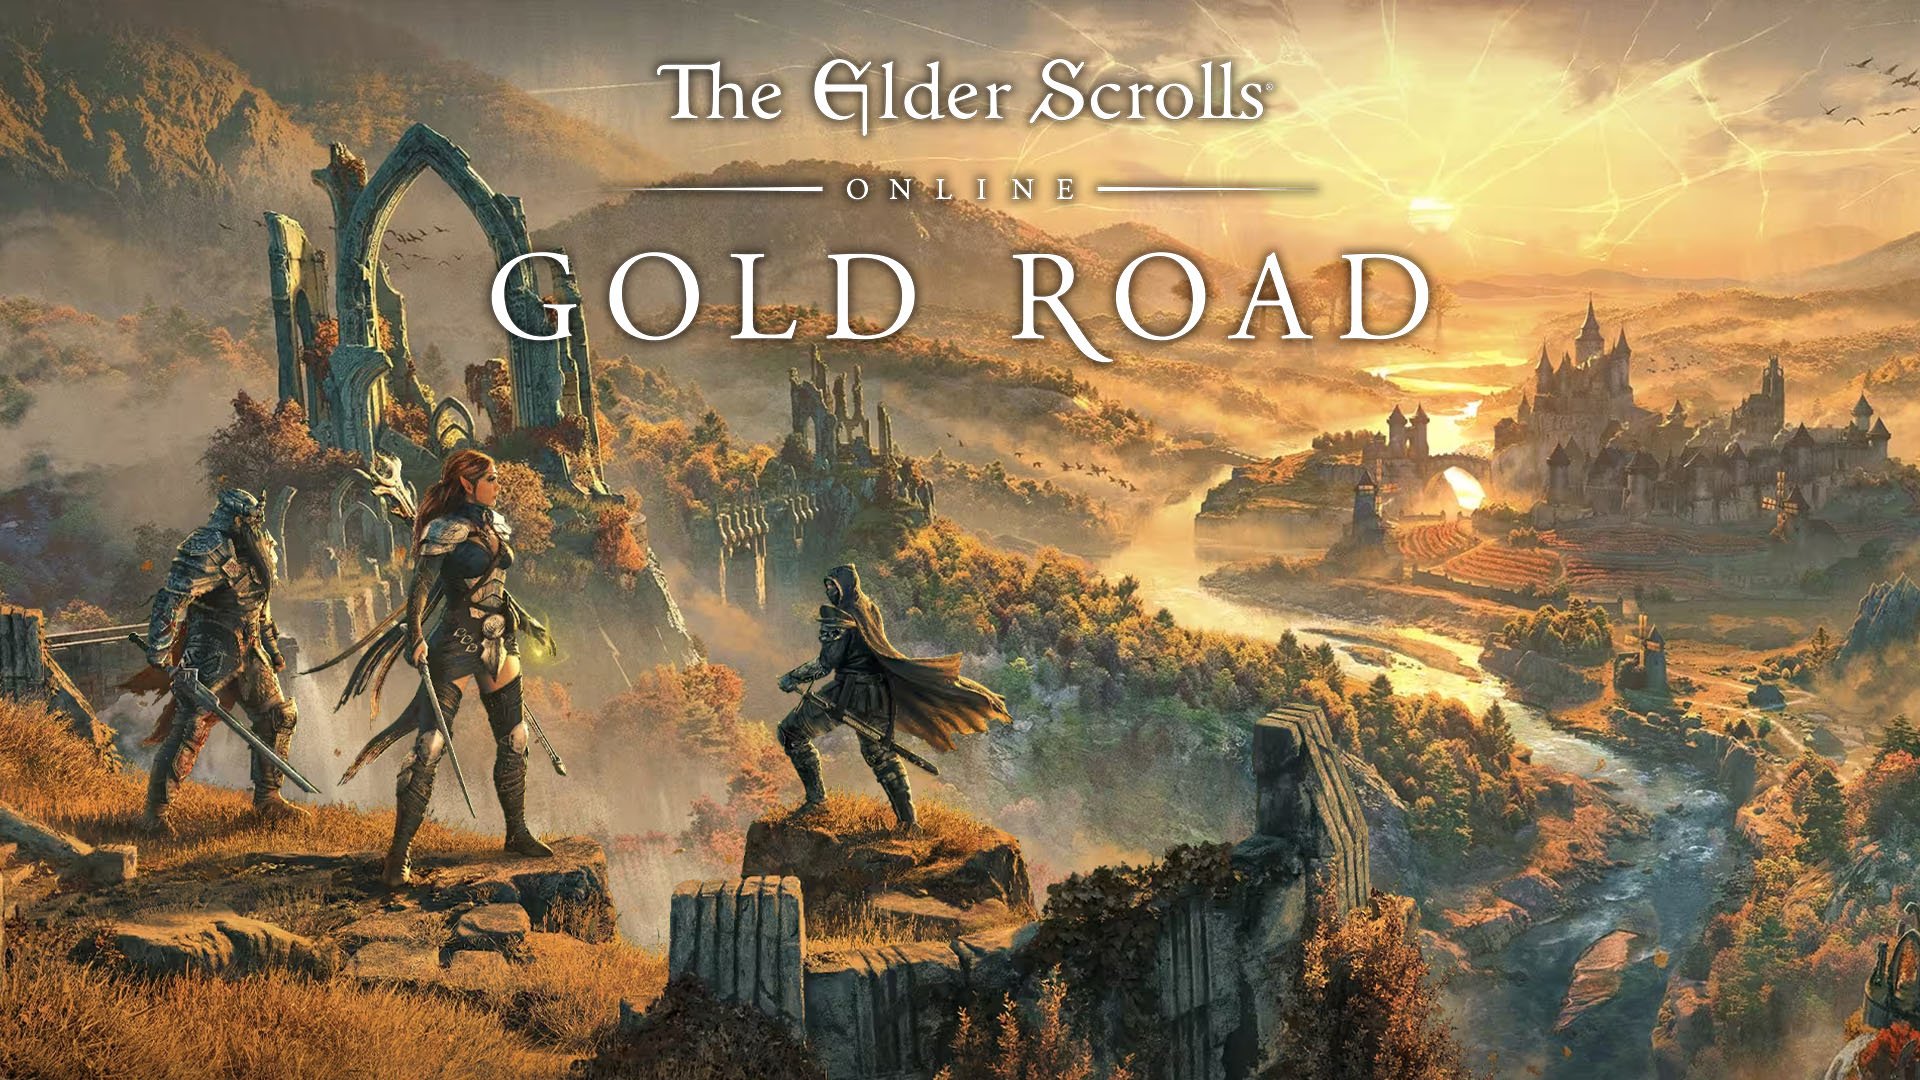 The Elder Scrolls Online: Gold Road – June 18th